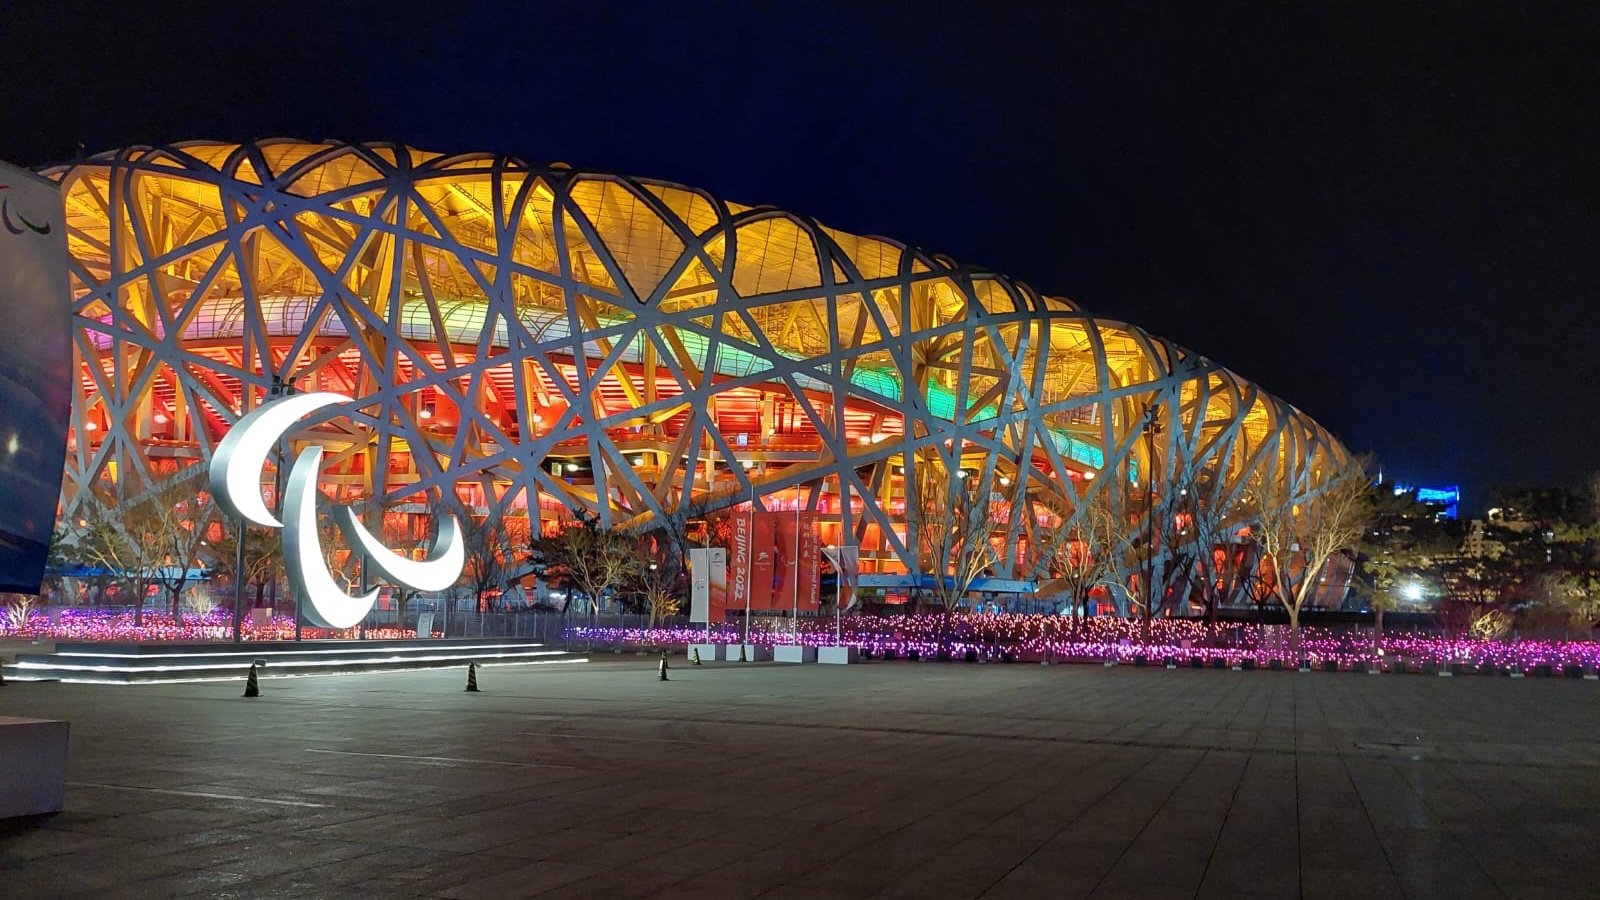 Pekin-2022 Qış Paralimpiya Oyunları başlayır